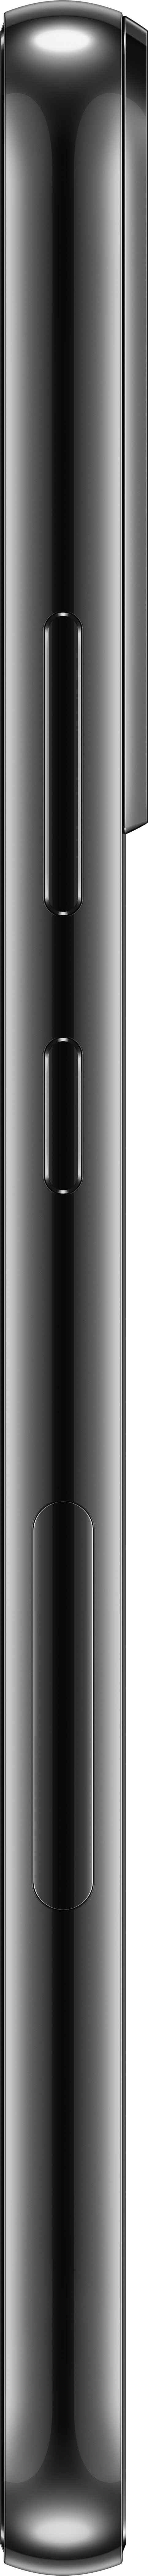 Samsung Galaxy S22+ Plus 5G SM-S906U1 128GB Black (US Model) - Factory  Unlocked Cell Phone - Very Good Condition